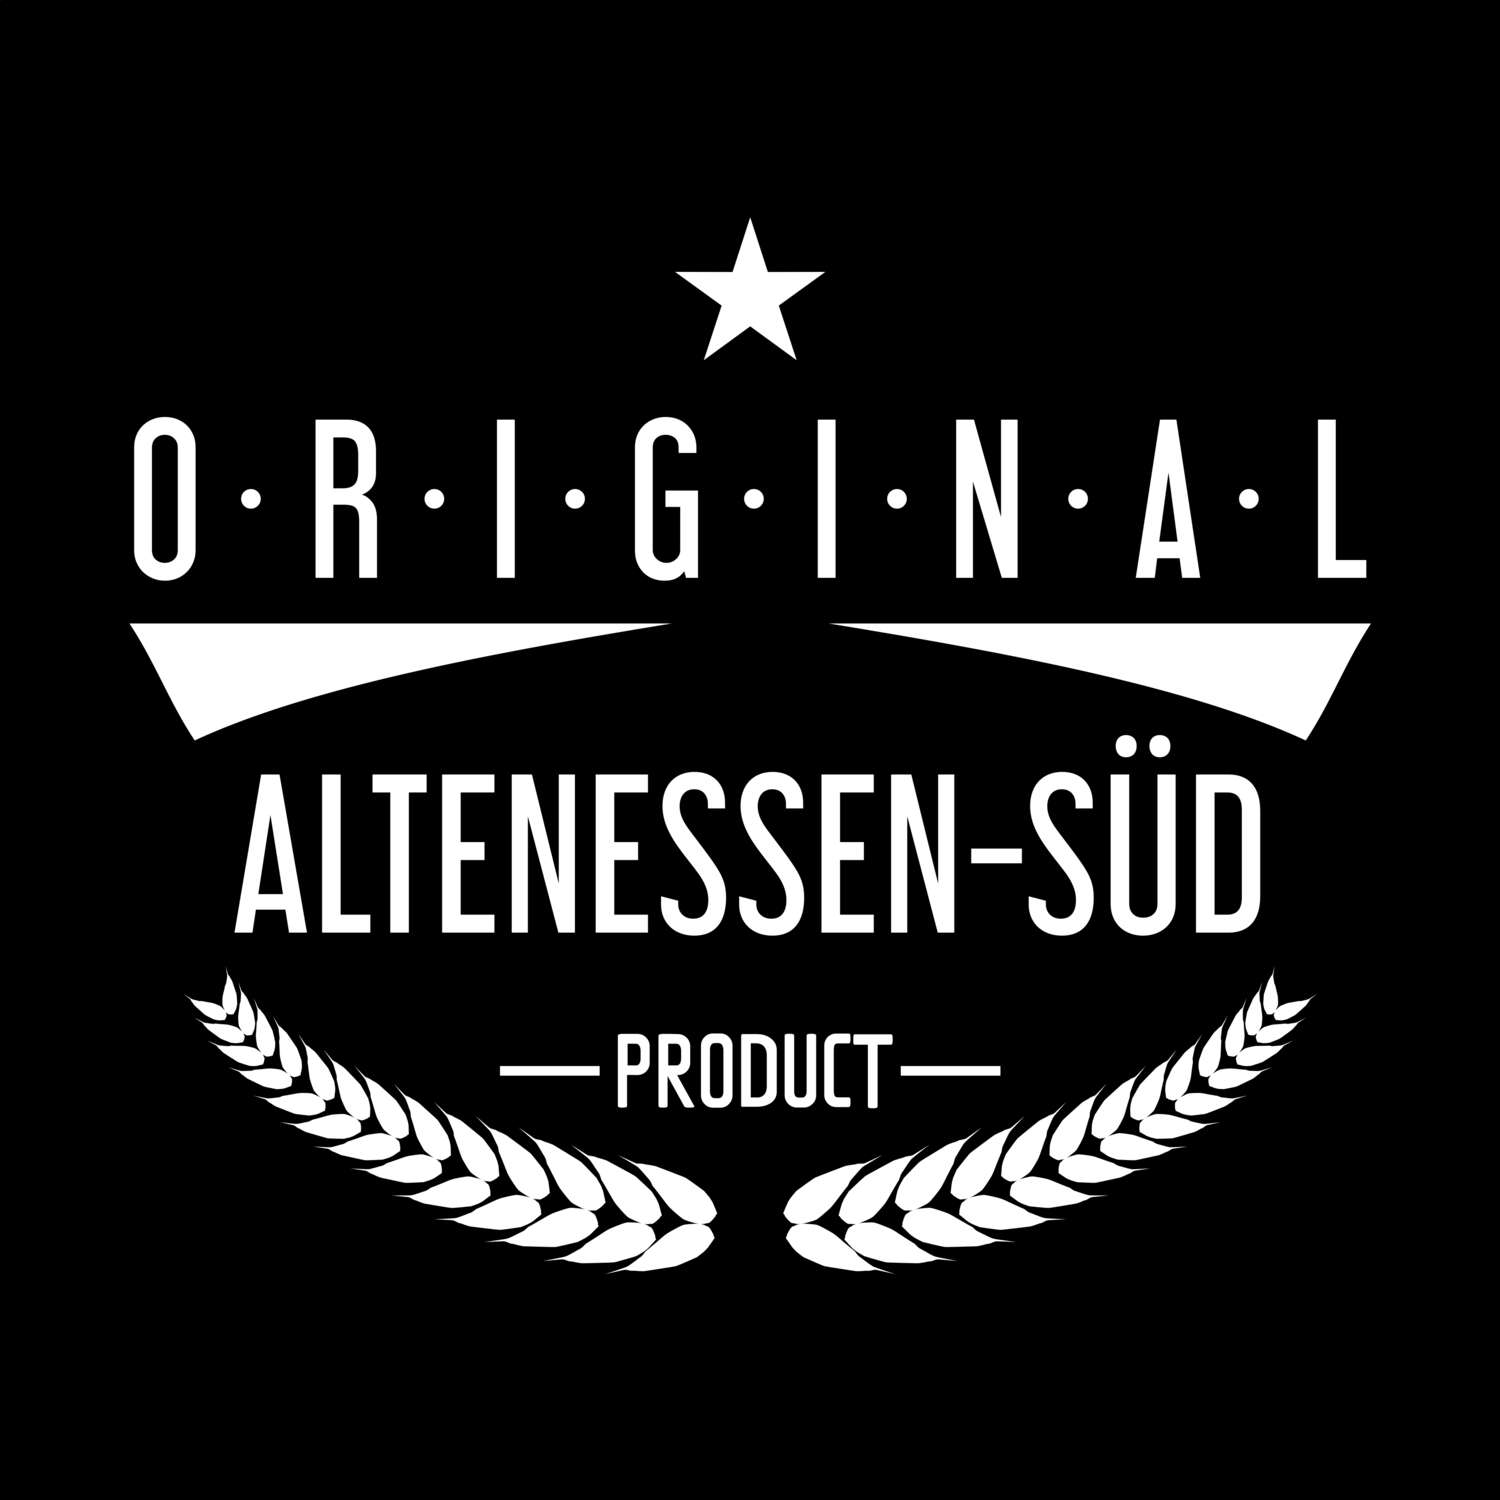 Altenessen-Süd T-Shirt »Original Product«